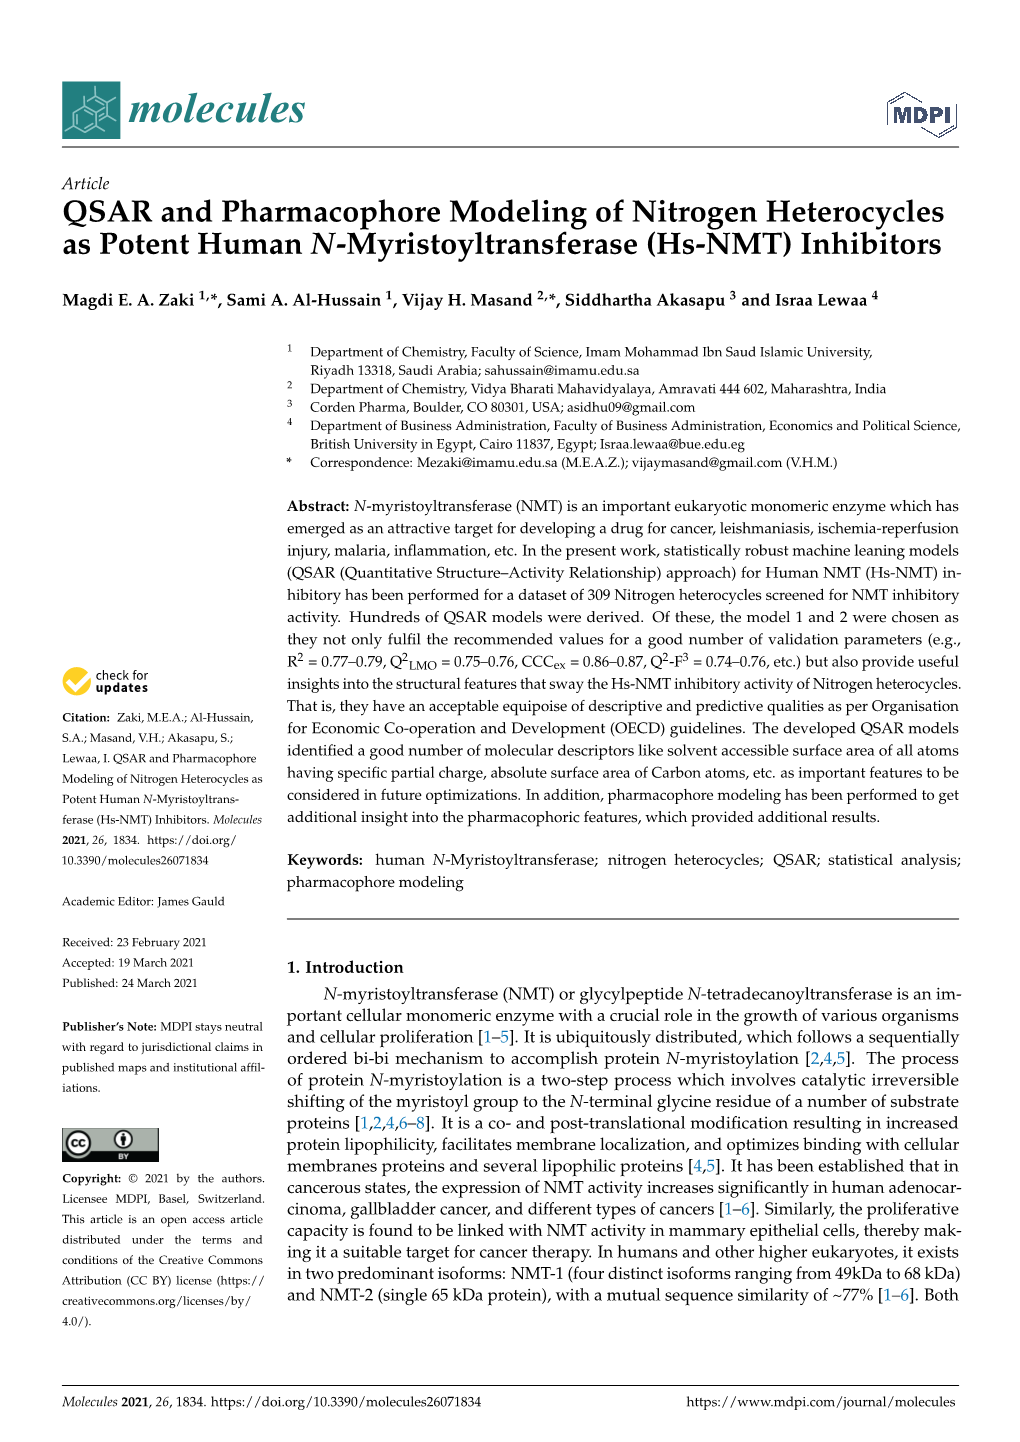 QSAR and Pharmacophore Modeling of Nitrogen Heterocycles As Potent Human N-Myristoyltransferase (Hs-NMT) Inhibitors